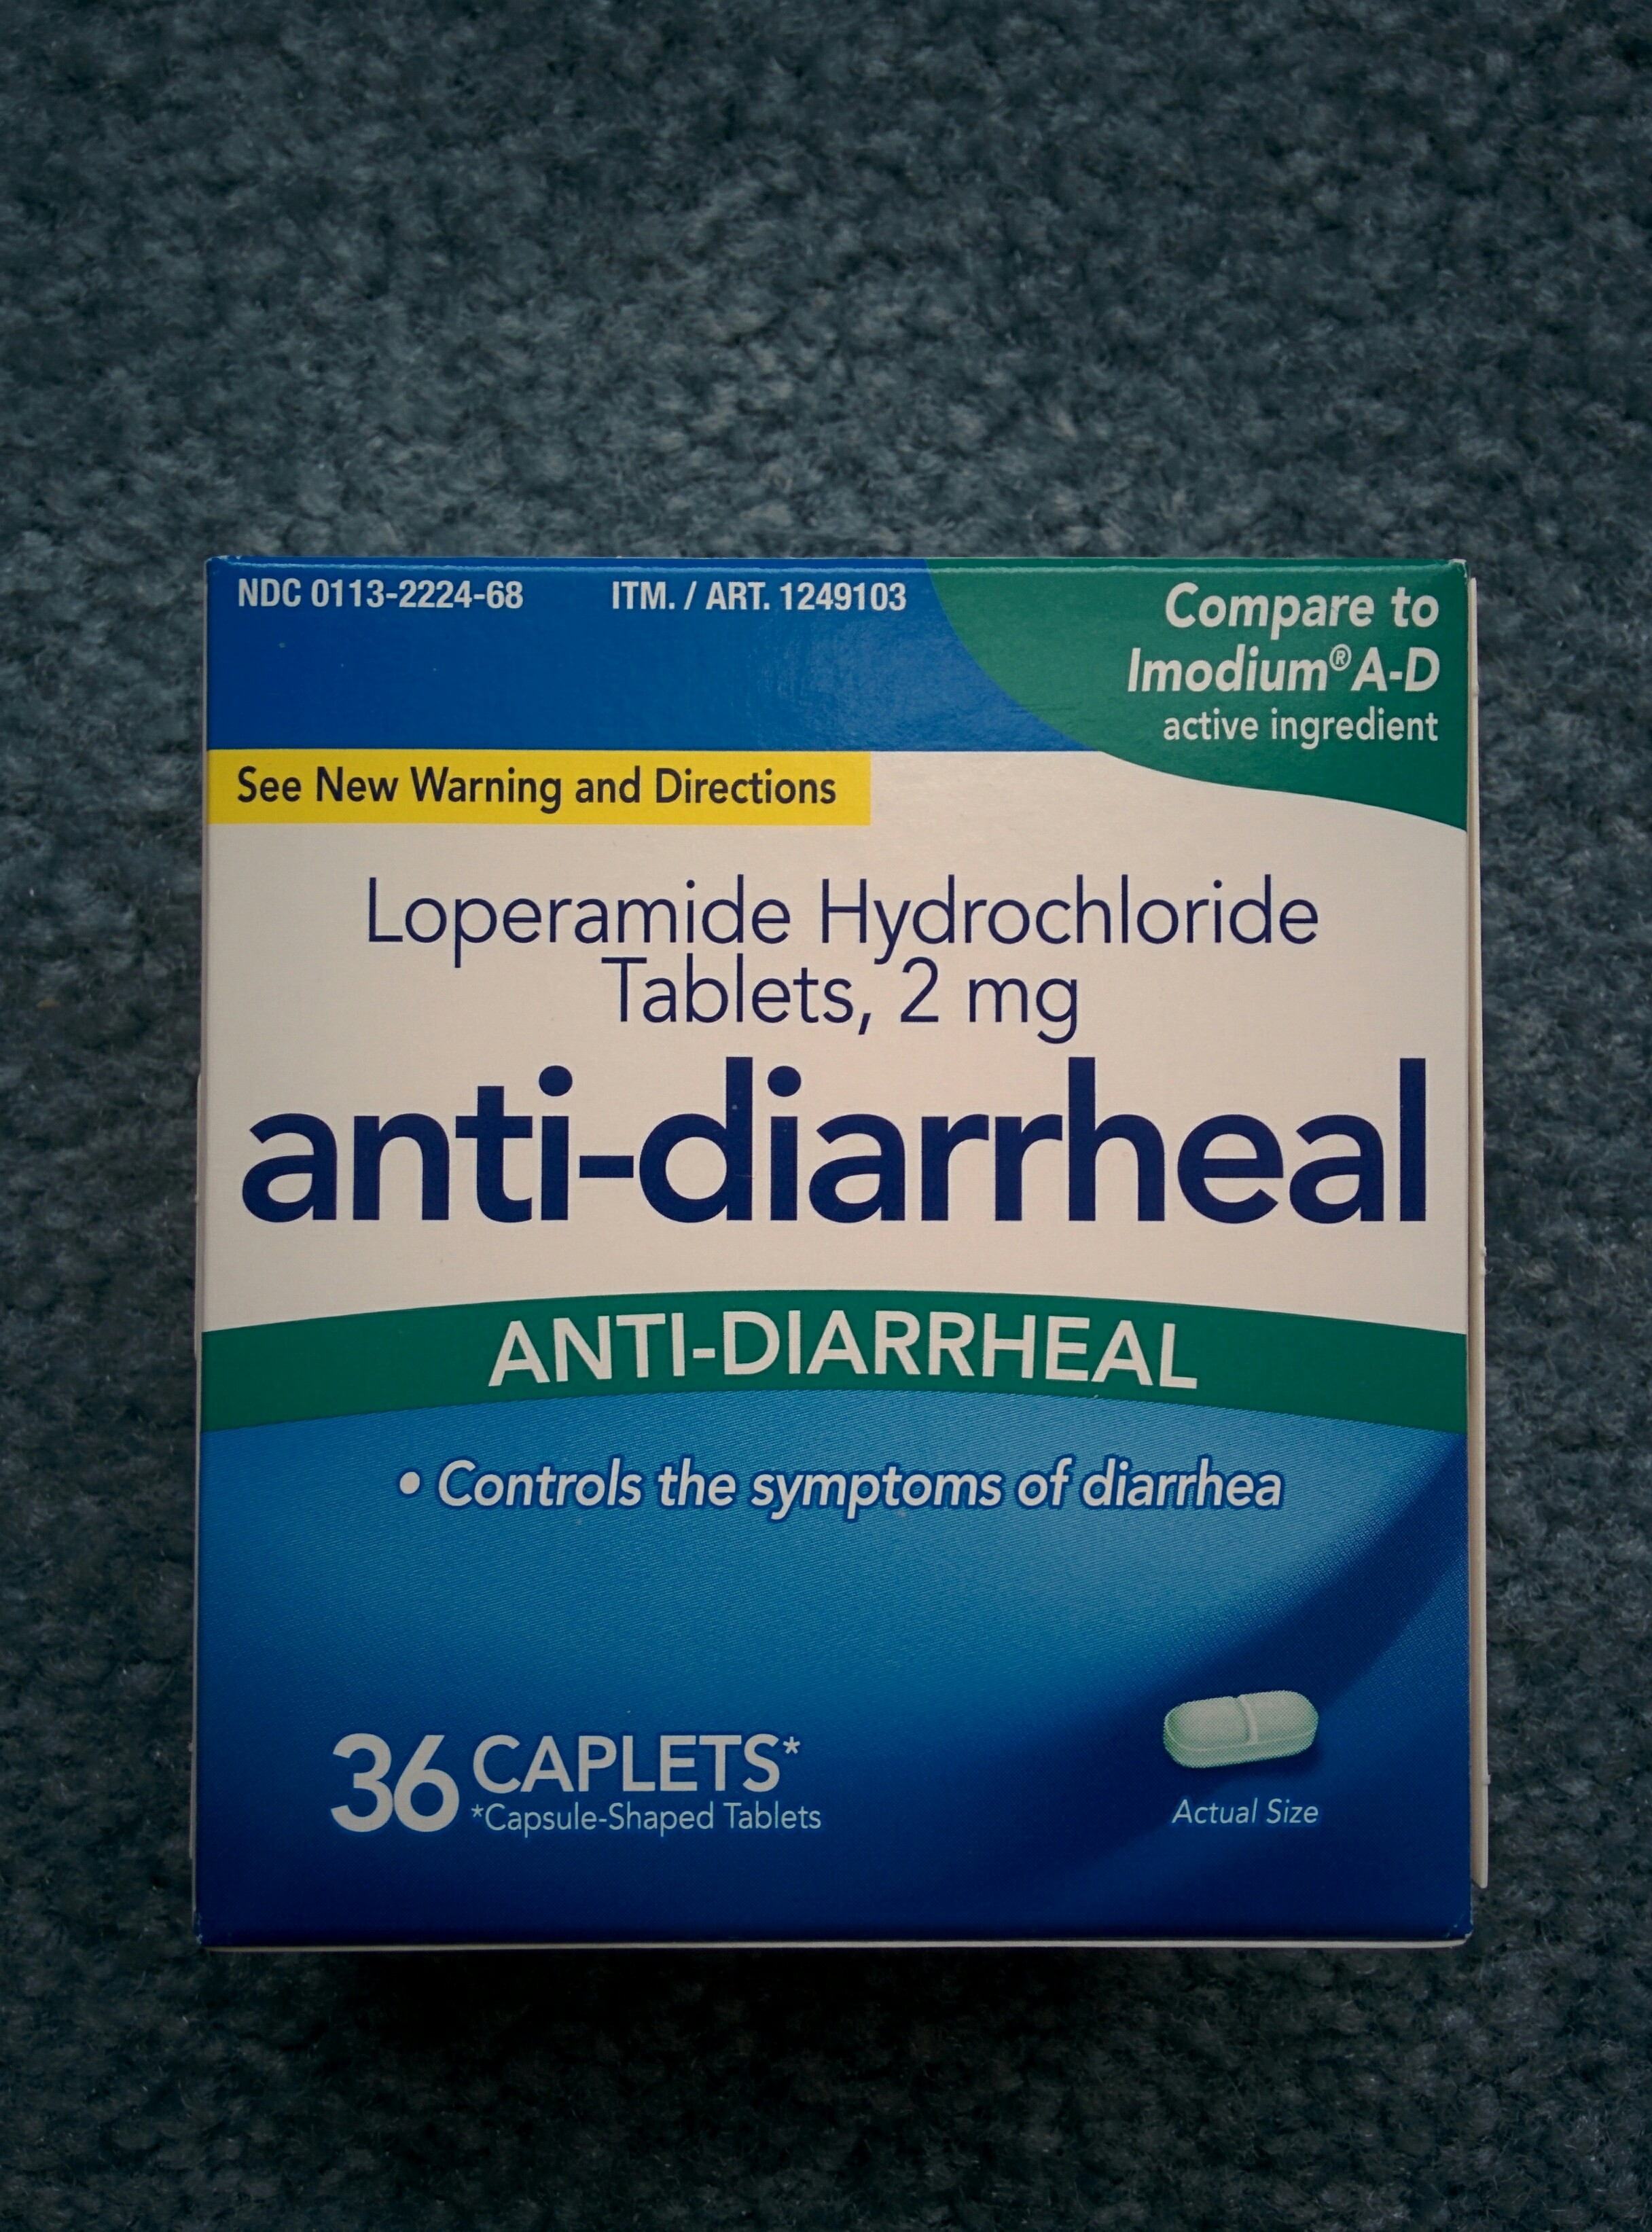 Loperamide Hydrochloride Tablets, Anti-Diarrheal, 2 mg, 36 caplets $1.29